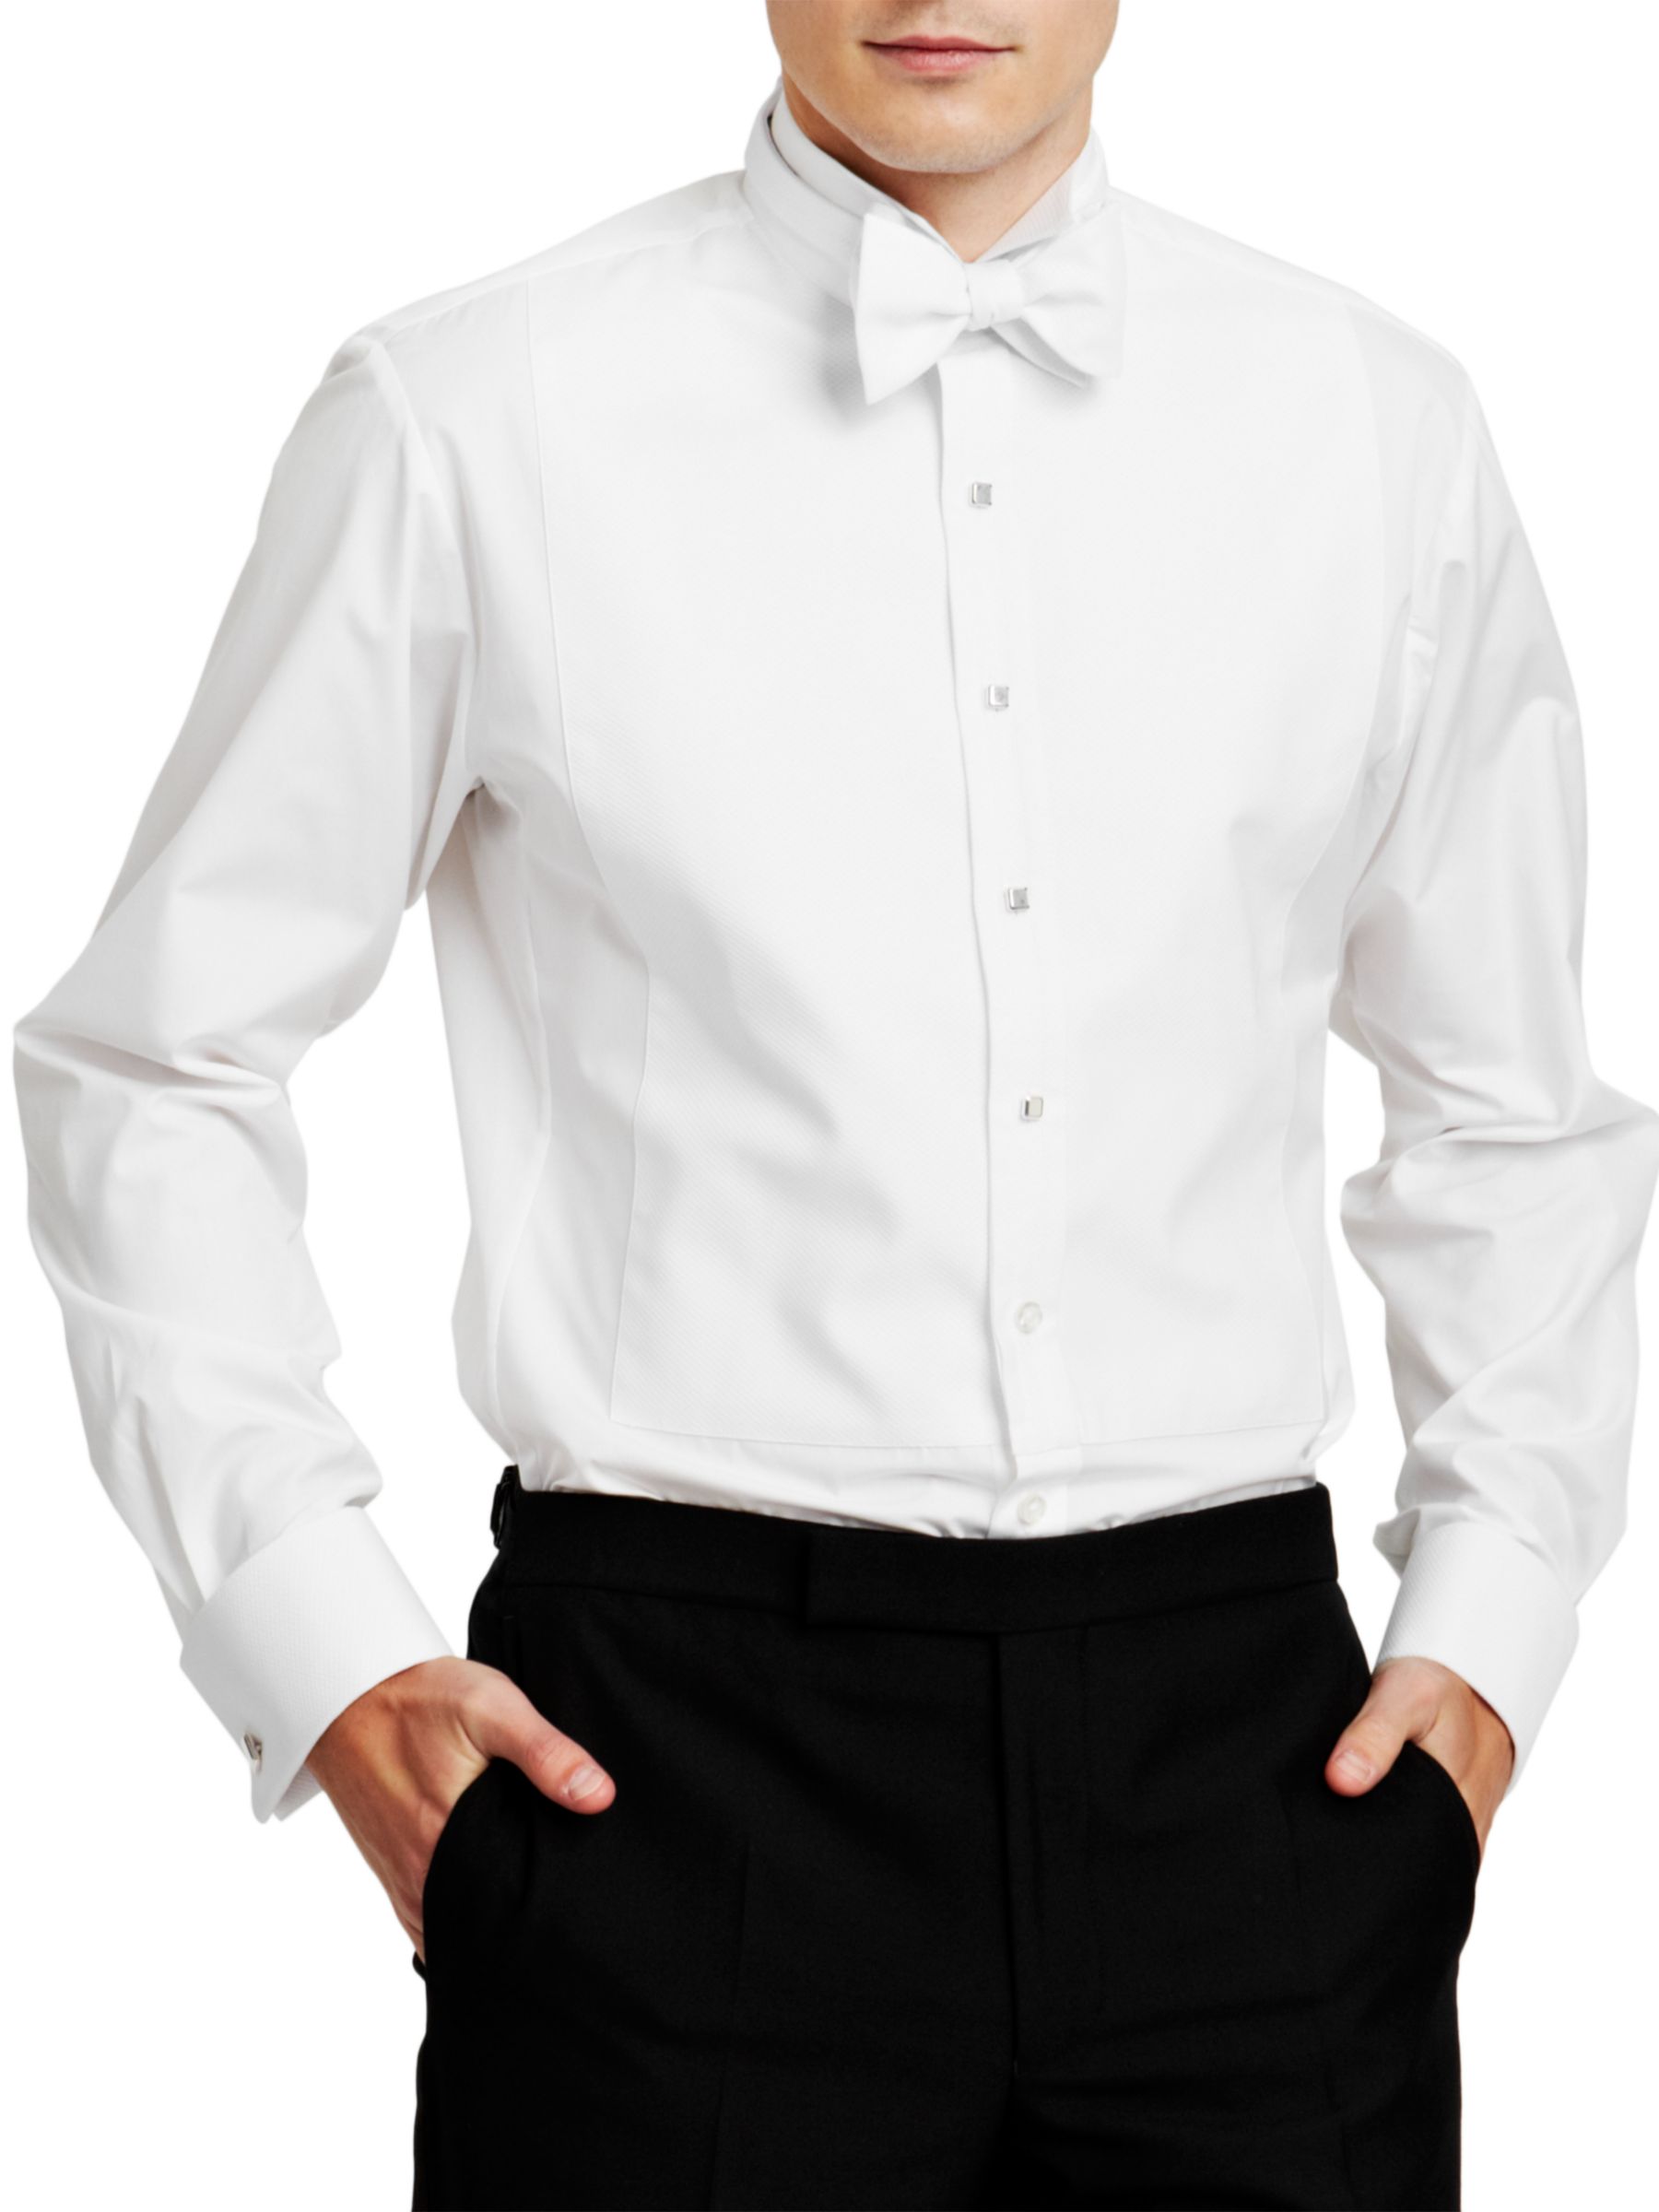 Thomas Pink Marcella Wing Collar Slim Fit Dress Shirt, White at John ...